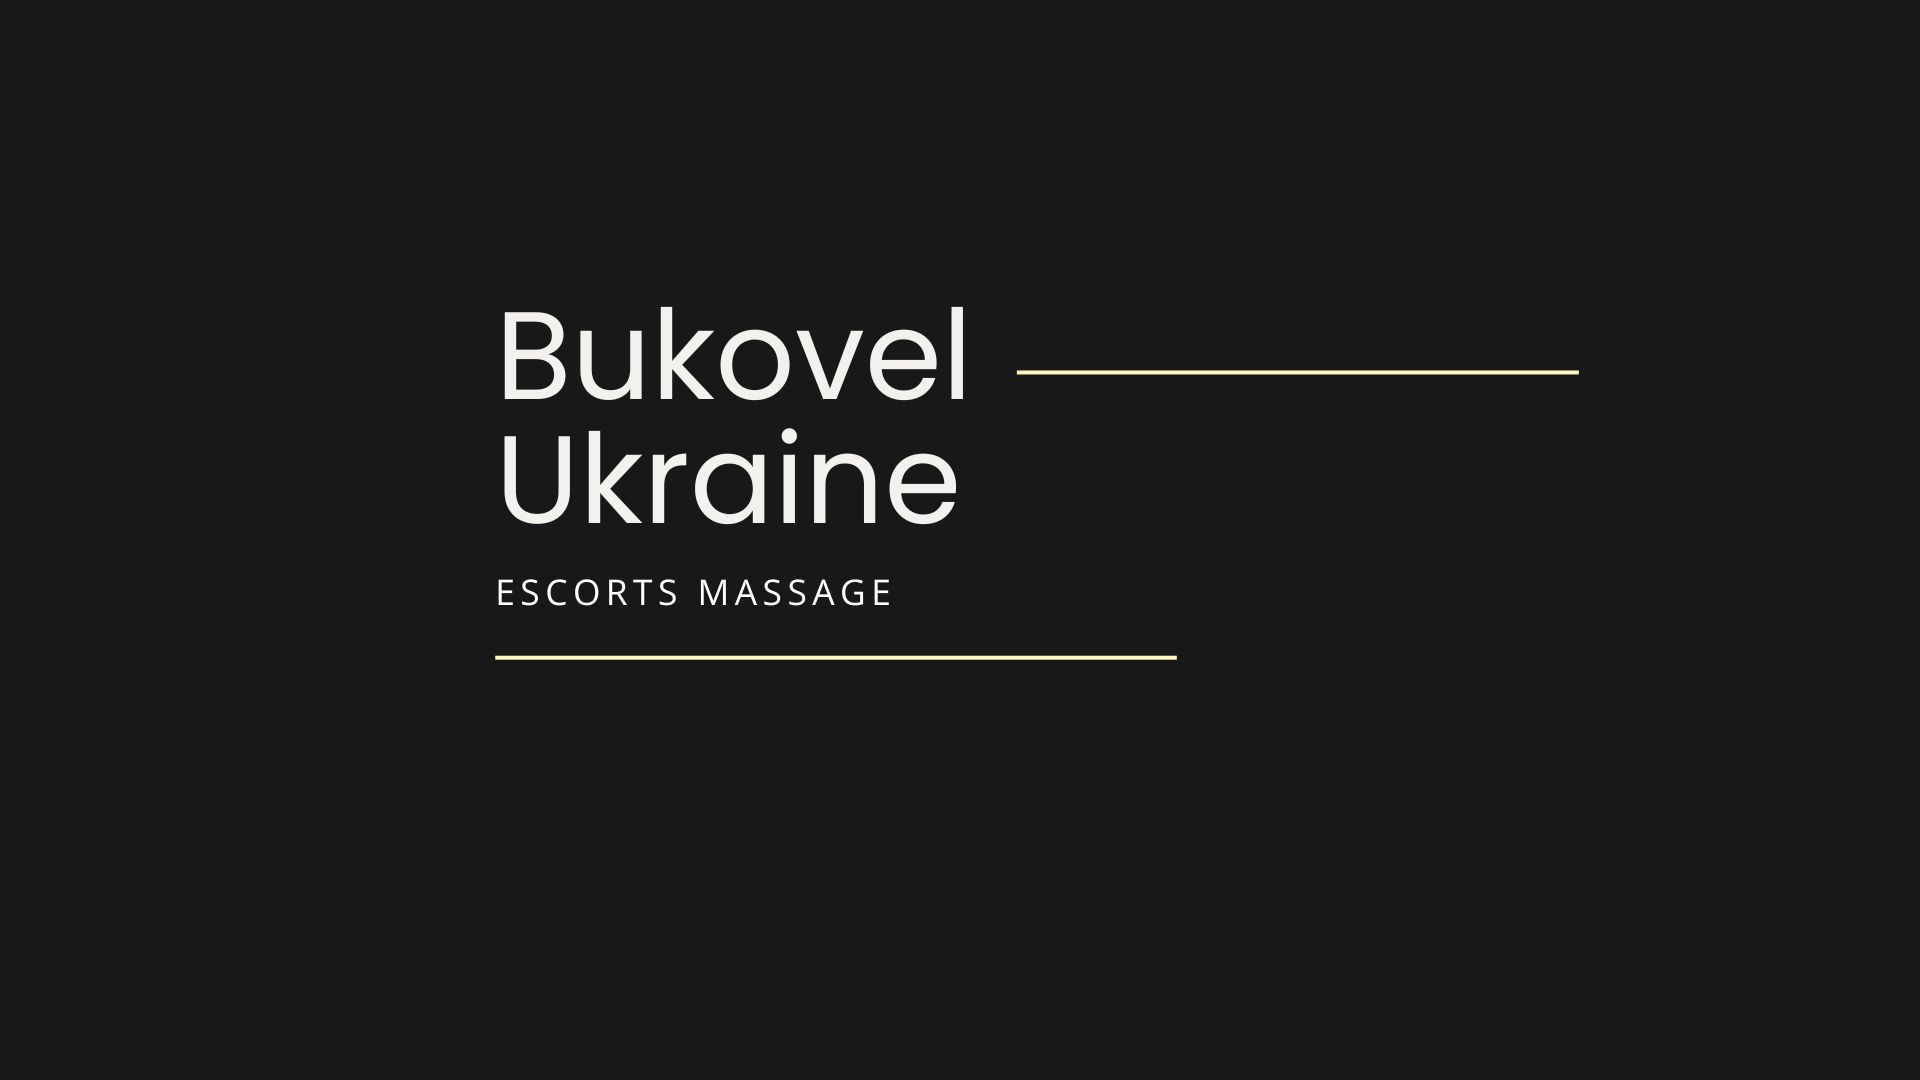 Bukovel escort massaGe - Elite girls and models Ukraine end Europe 💫